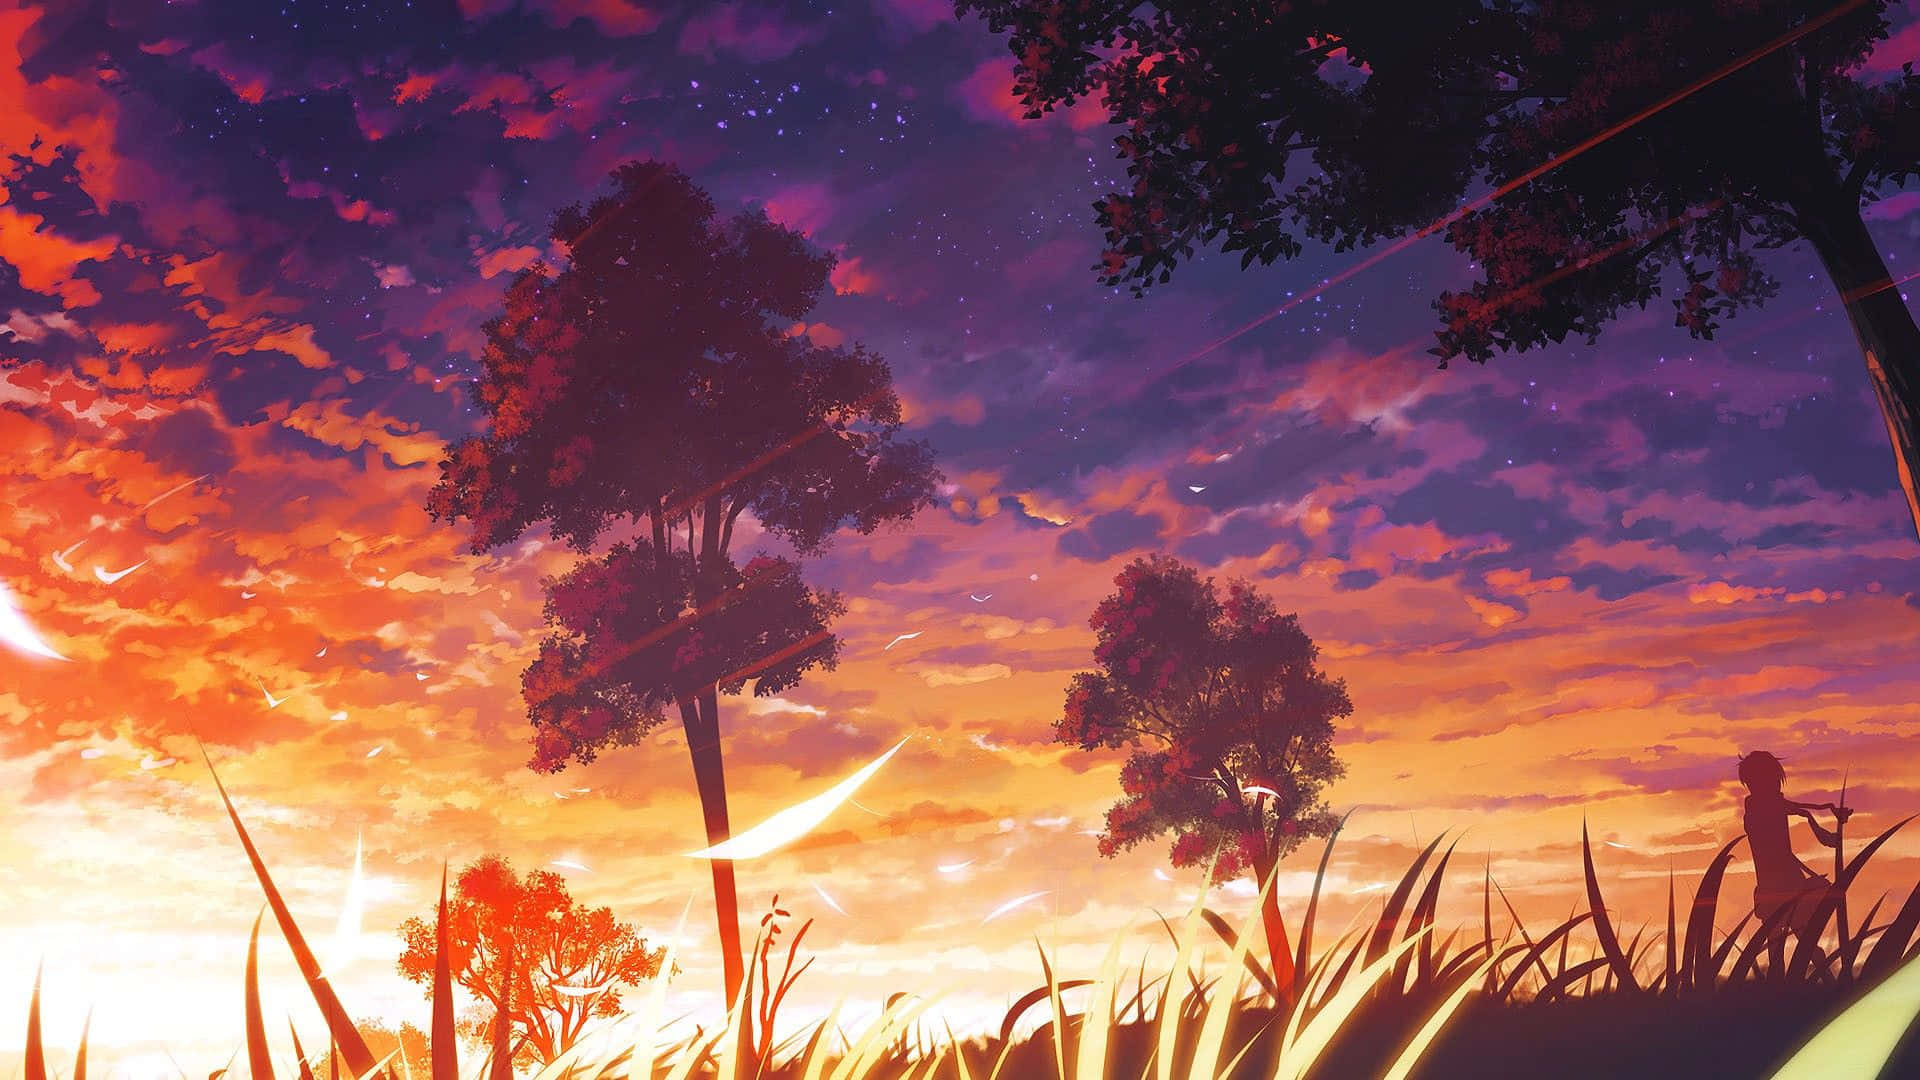 A surreal anime landscape